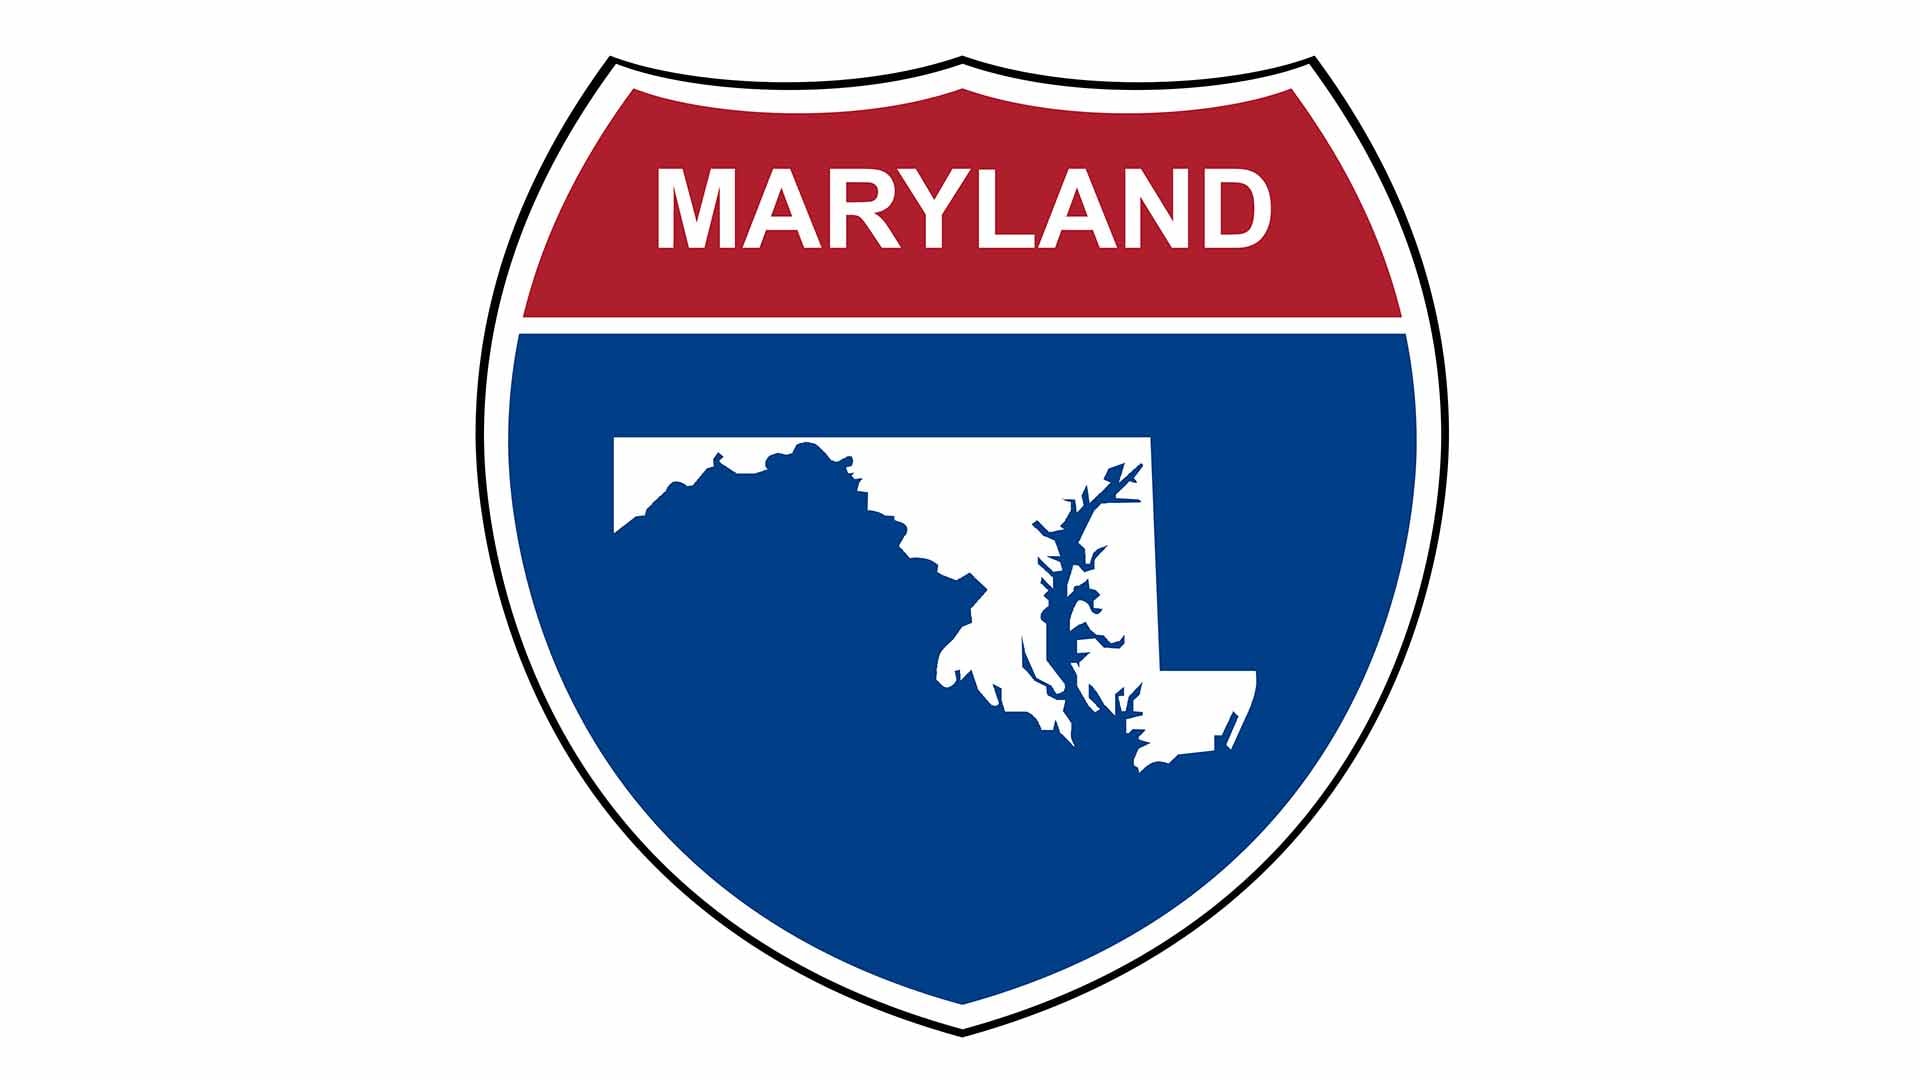 Maryland state roadside sign